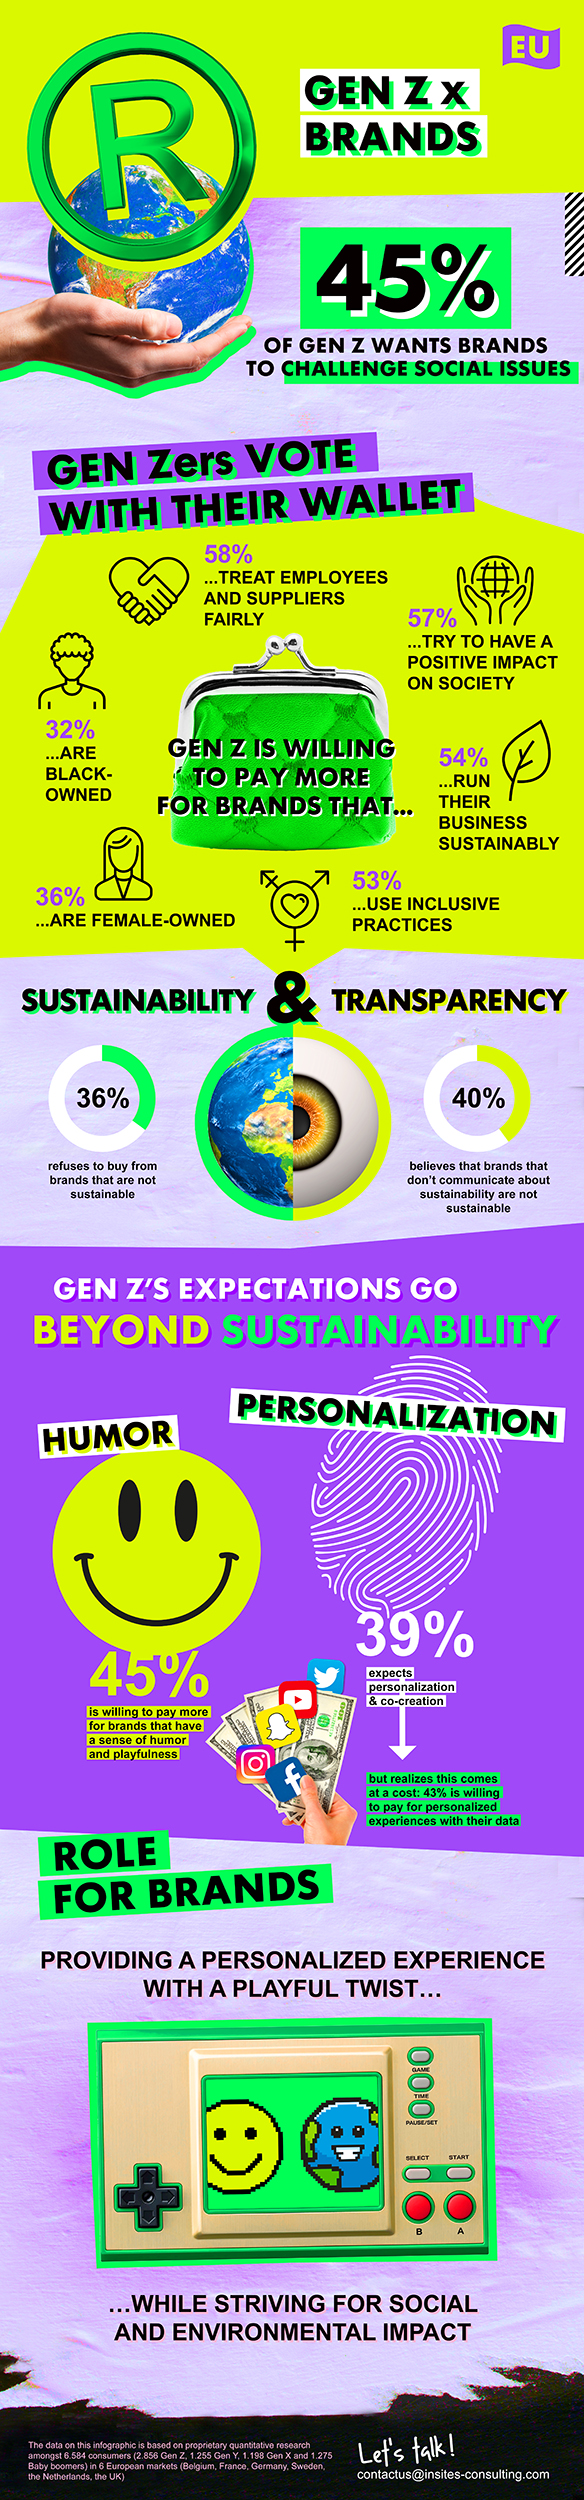 Gen Z x Brands Infographic Europe